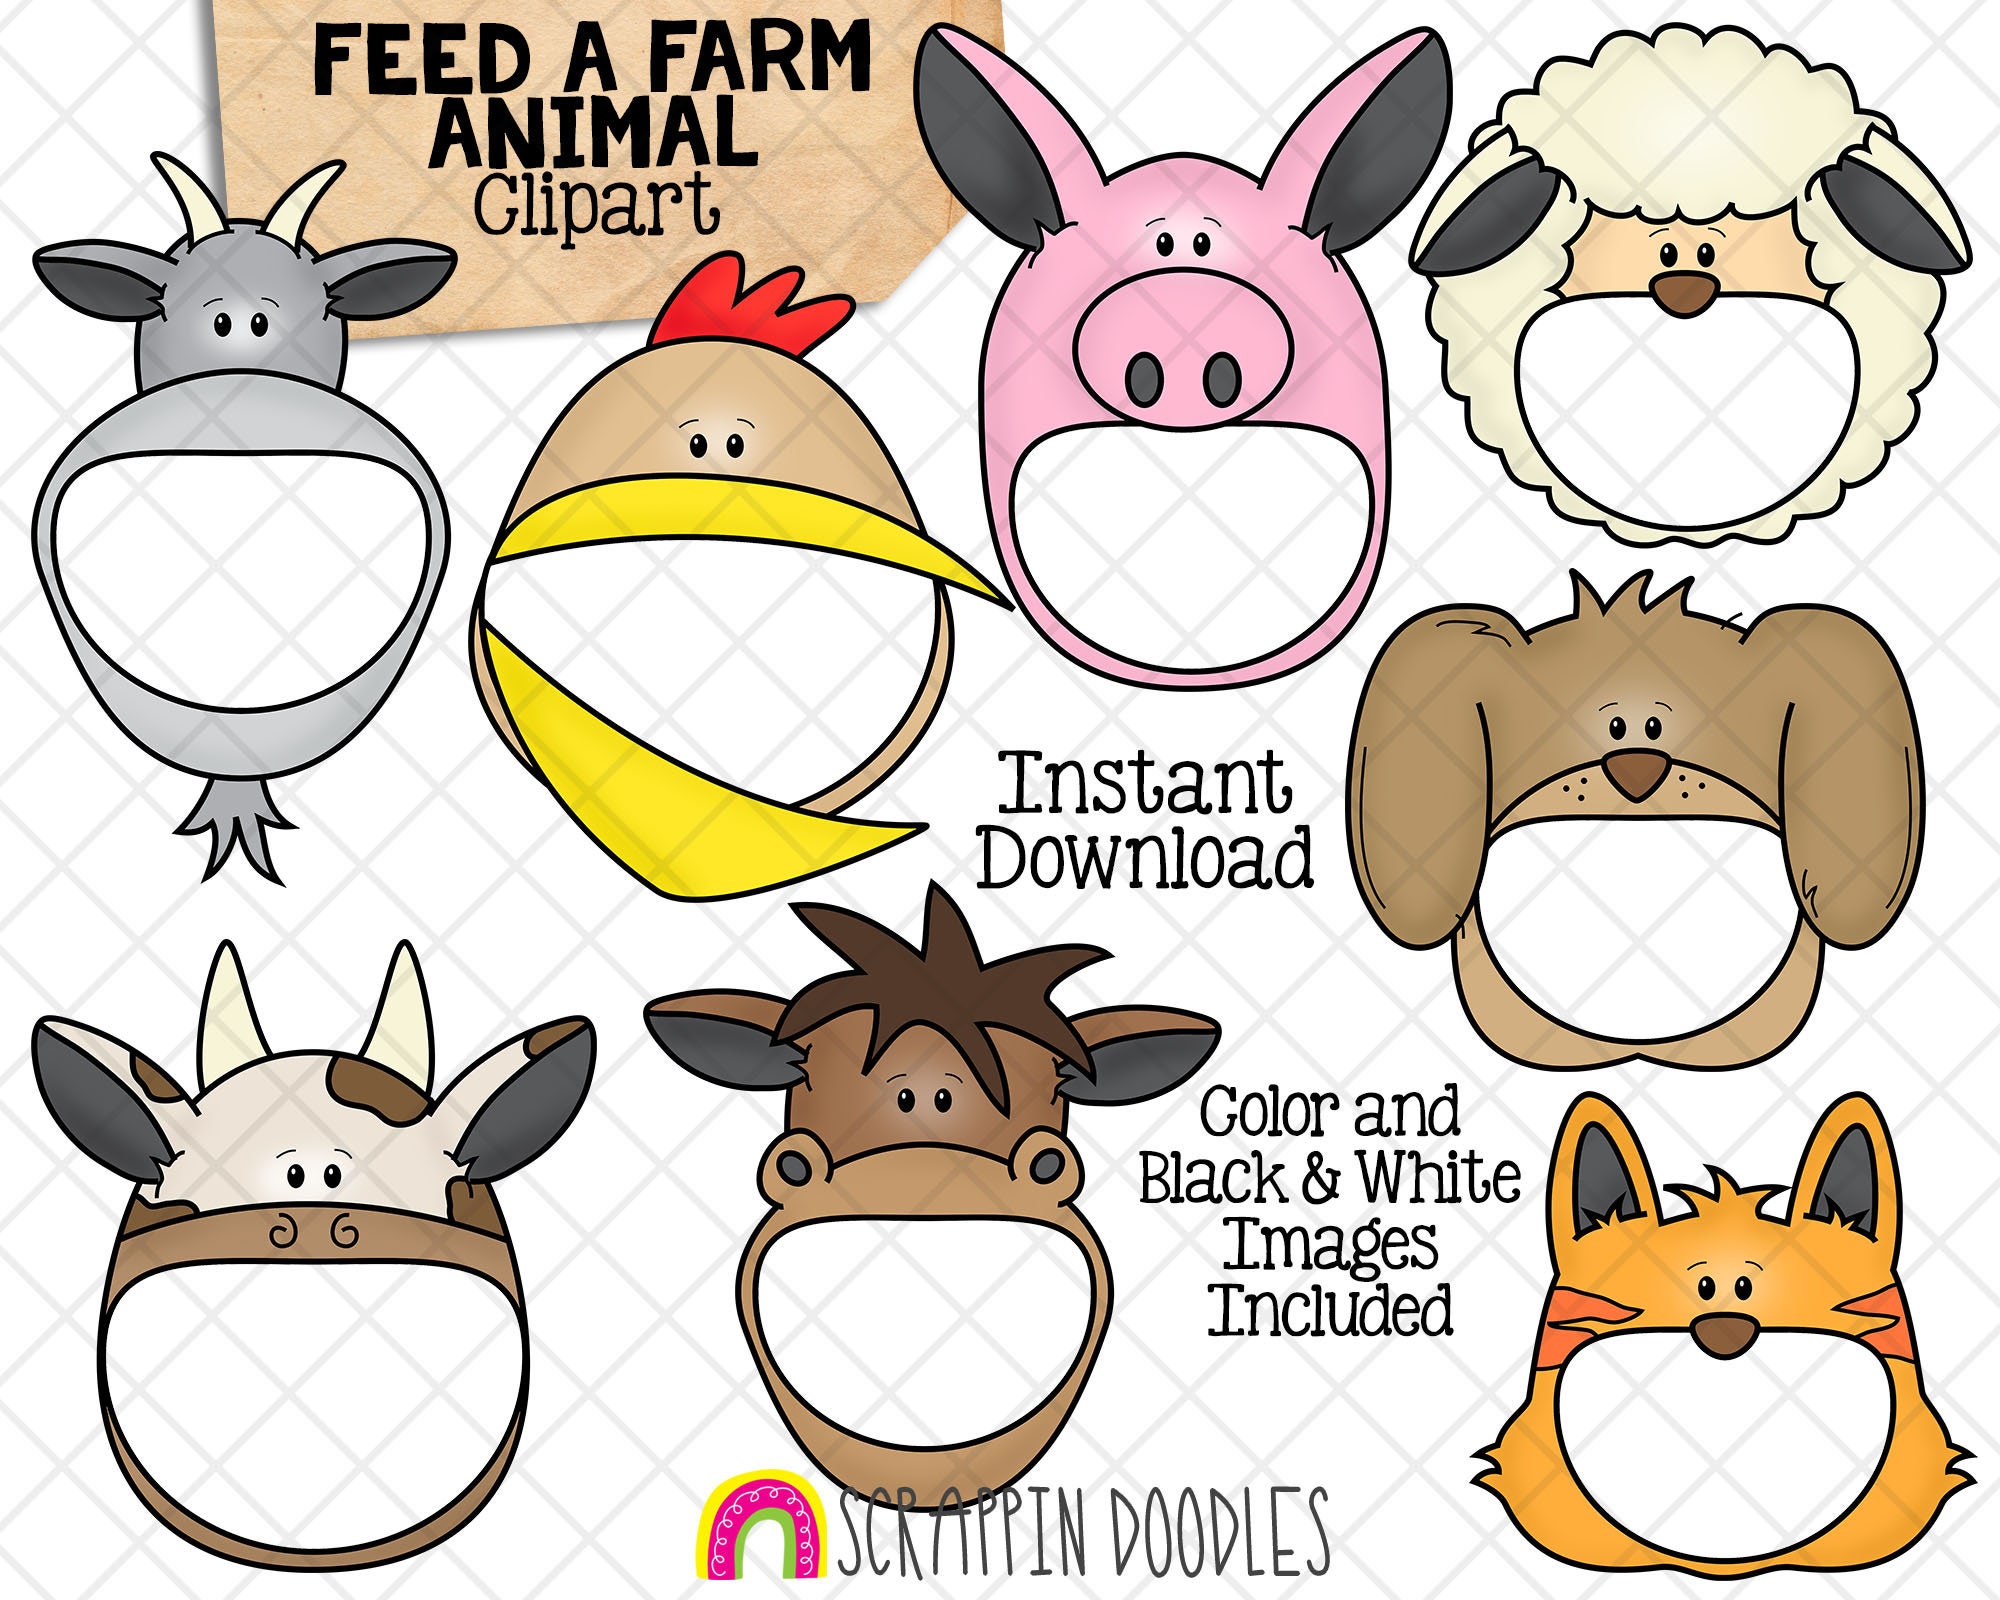 feed-a-farm-animal-clipart-feeding-open-mouth-animals-goat-etsy-uk